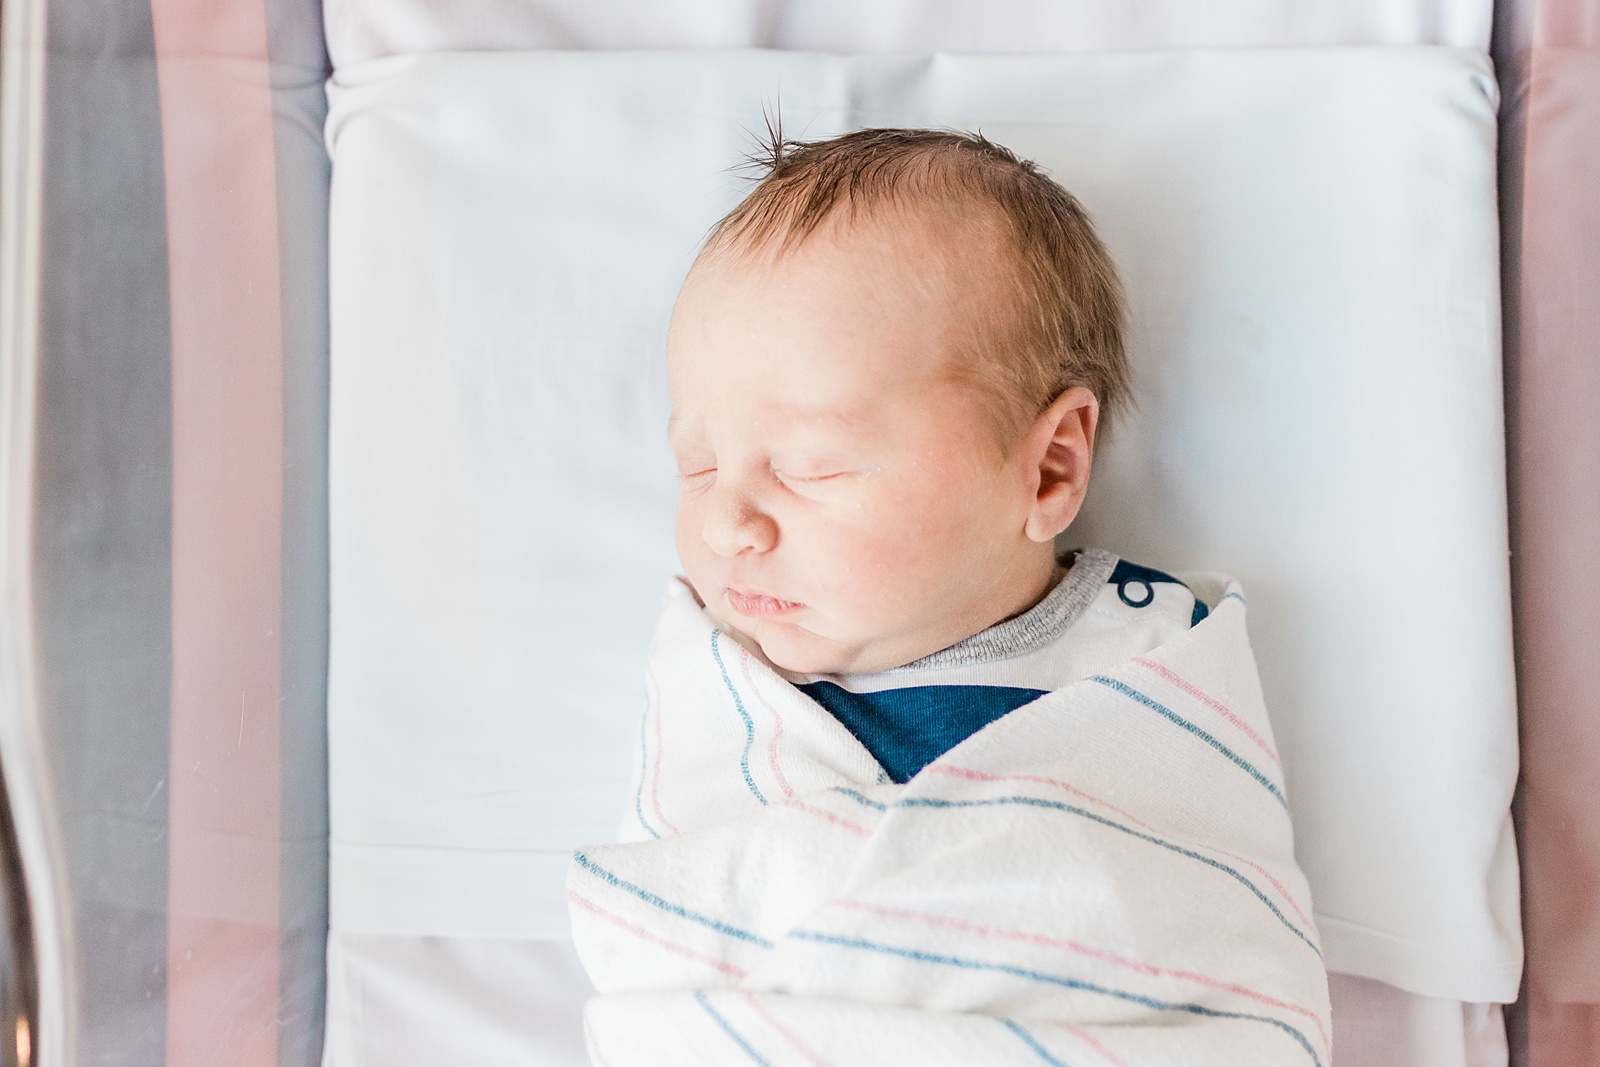 Newborn in hospital bassinet | Caitlyn Motycka Photography